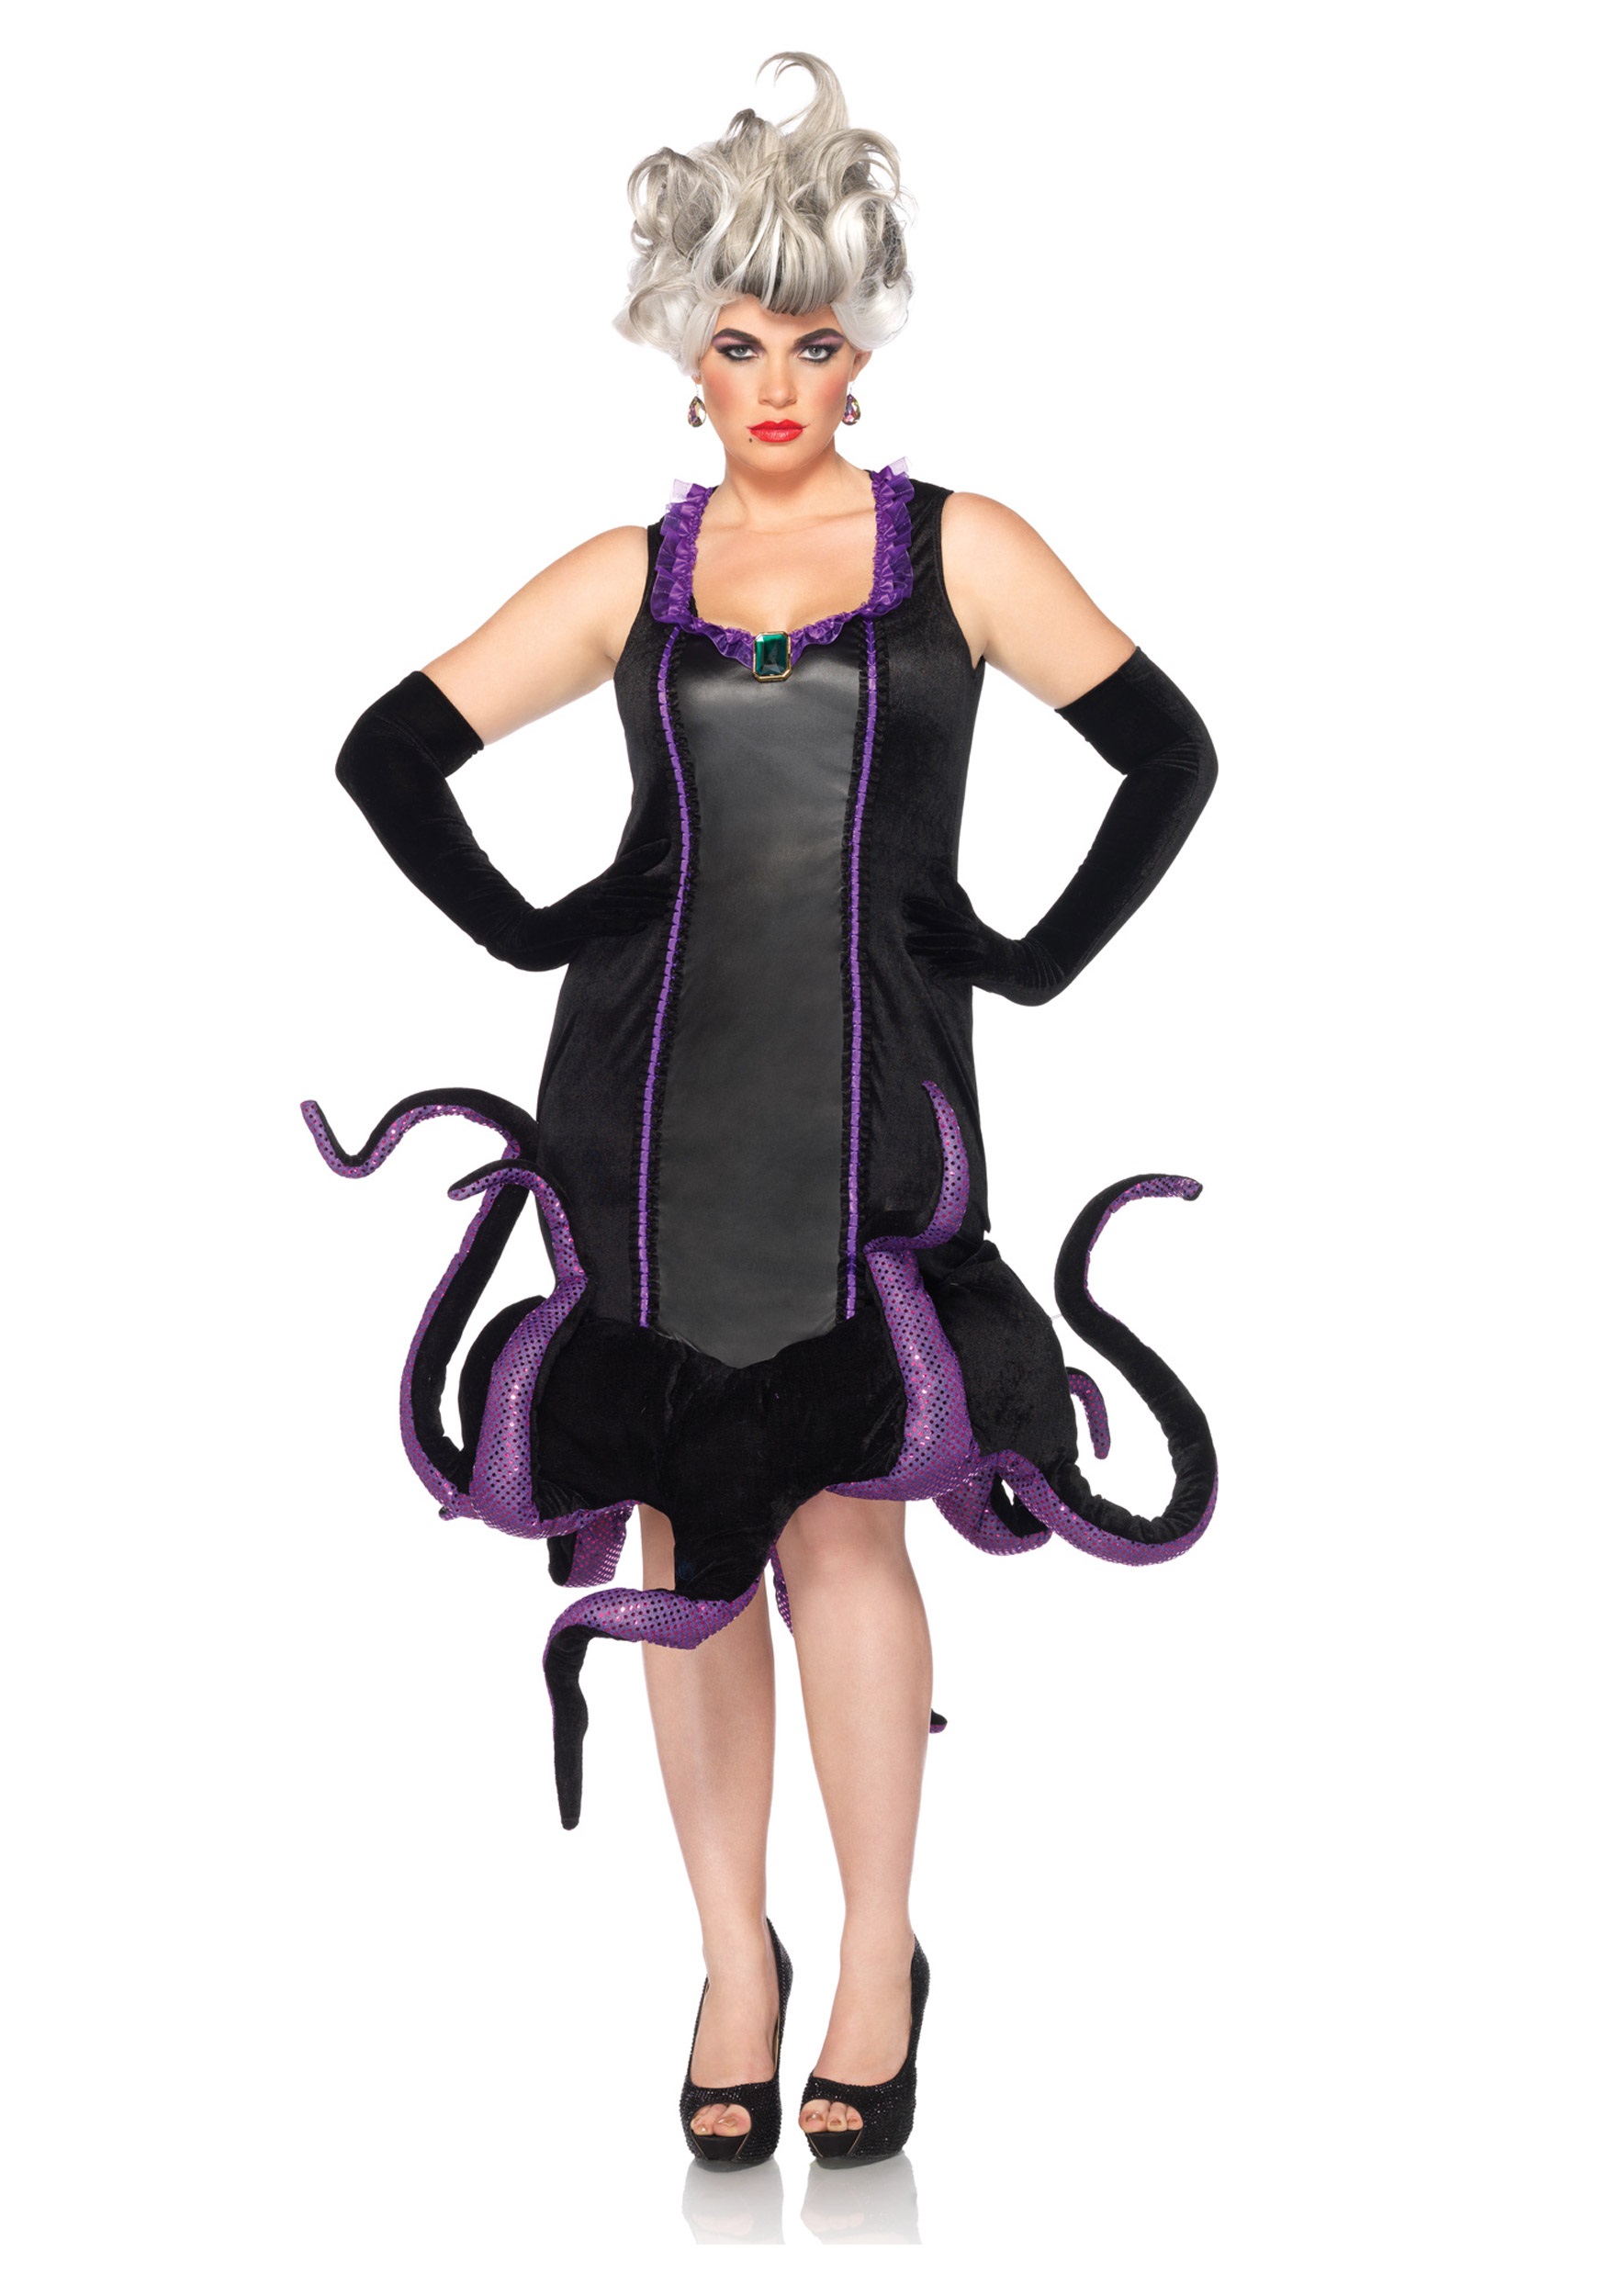 Womens Disney Plus Ursula Costume - Halloween Costume Ideas 2021 Devil Costume For Women Makeup